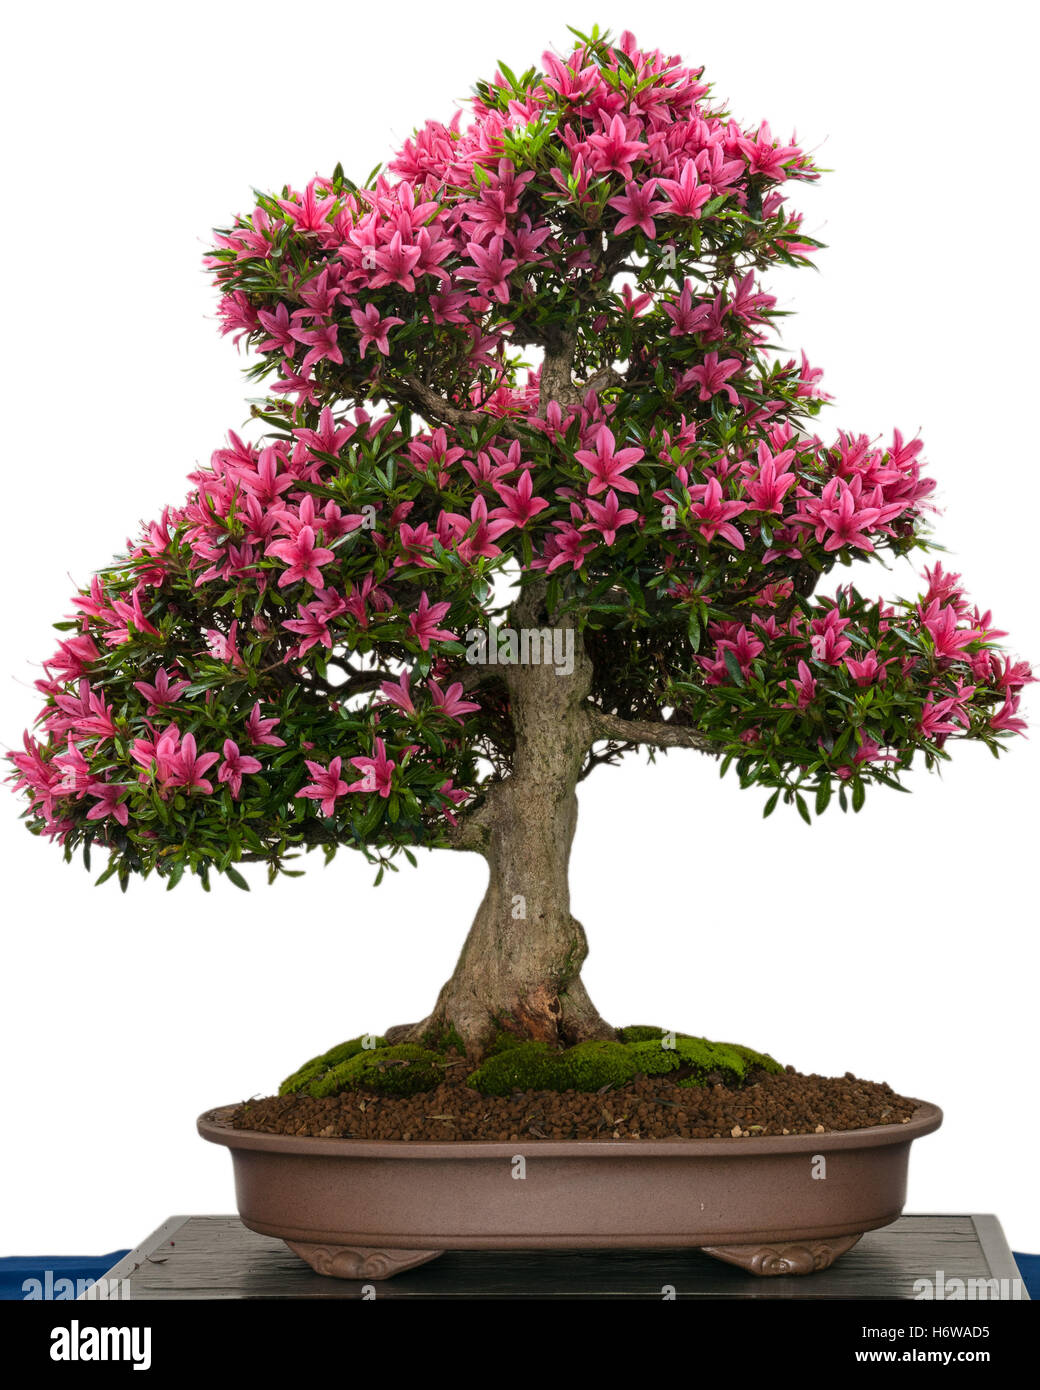 blooming azalea bonsai tree with pink flowers Stock Photo